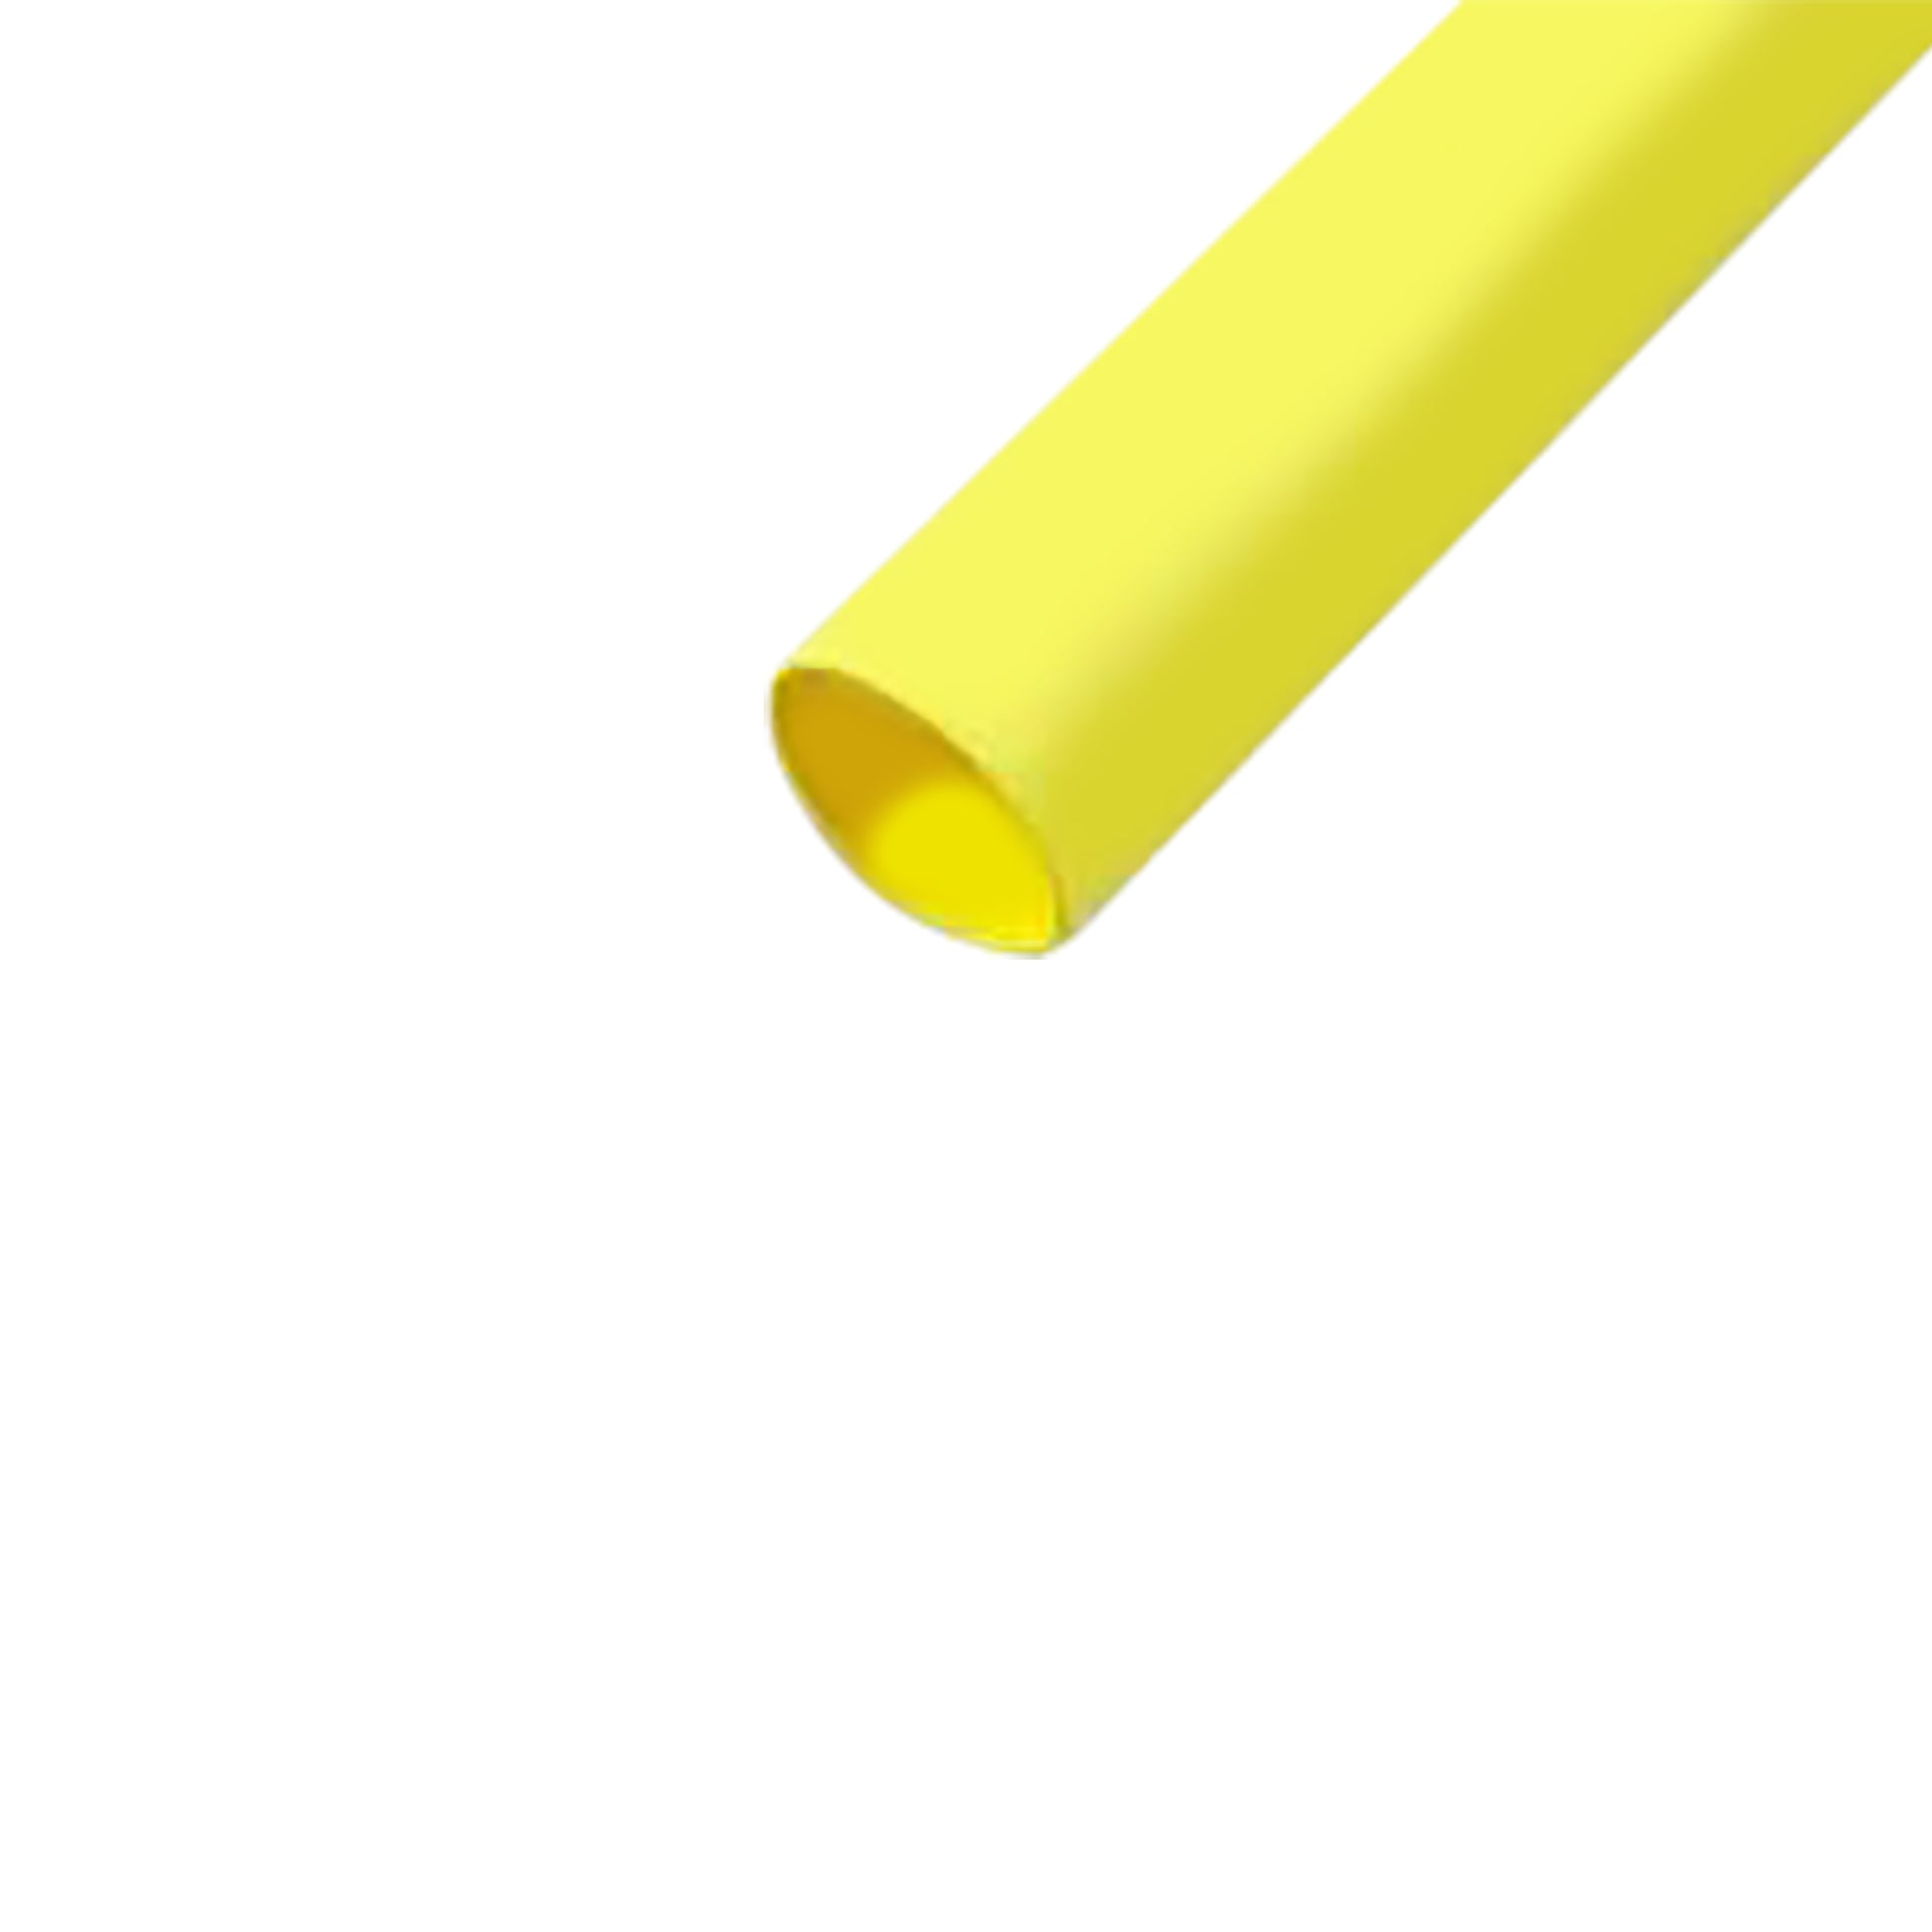 Flexible Thin Single Wall Non-Adhesive Heat Shrink Tubing 2:1 Yellow 3/32" ID - 12" Inch 10 Pack